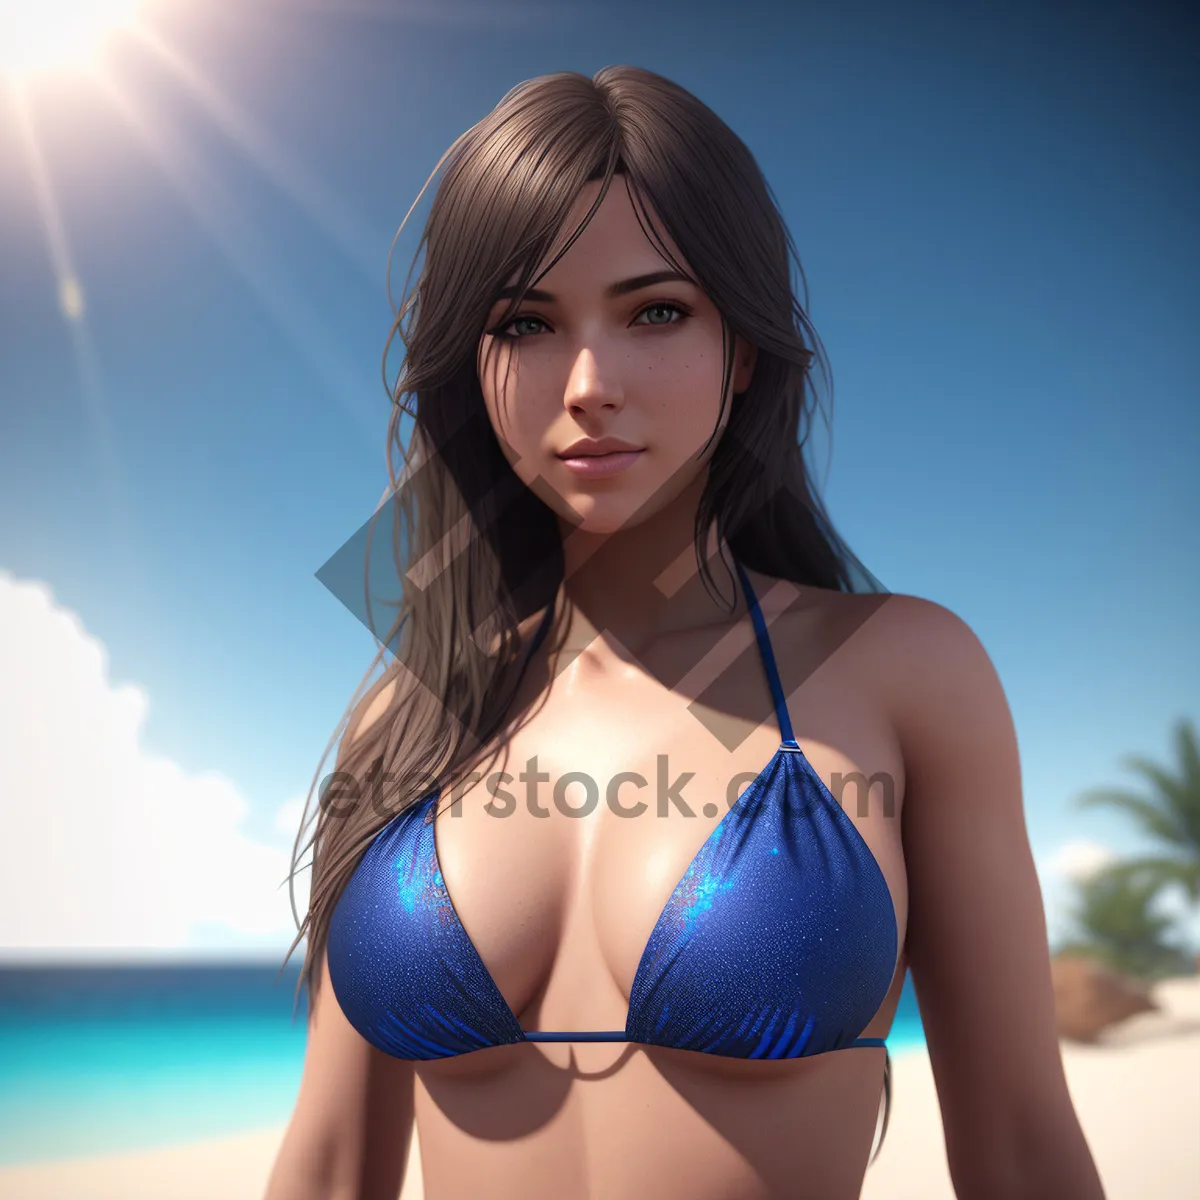 Picture of Seductive Beach Babe in Stylish Bikini